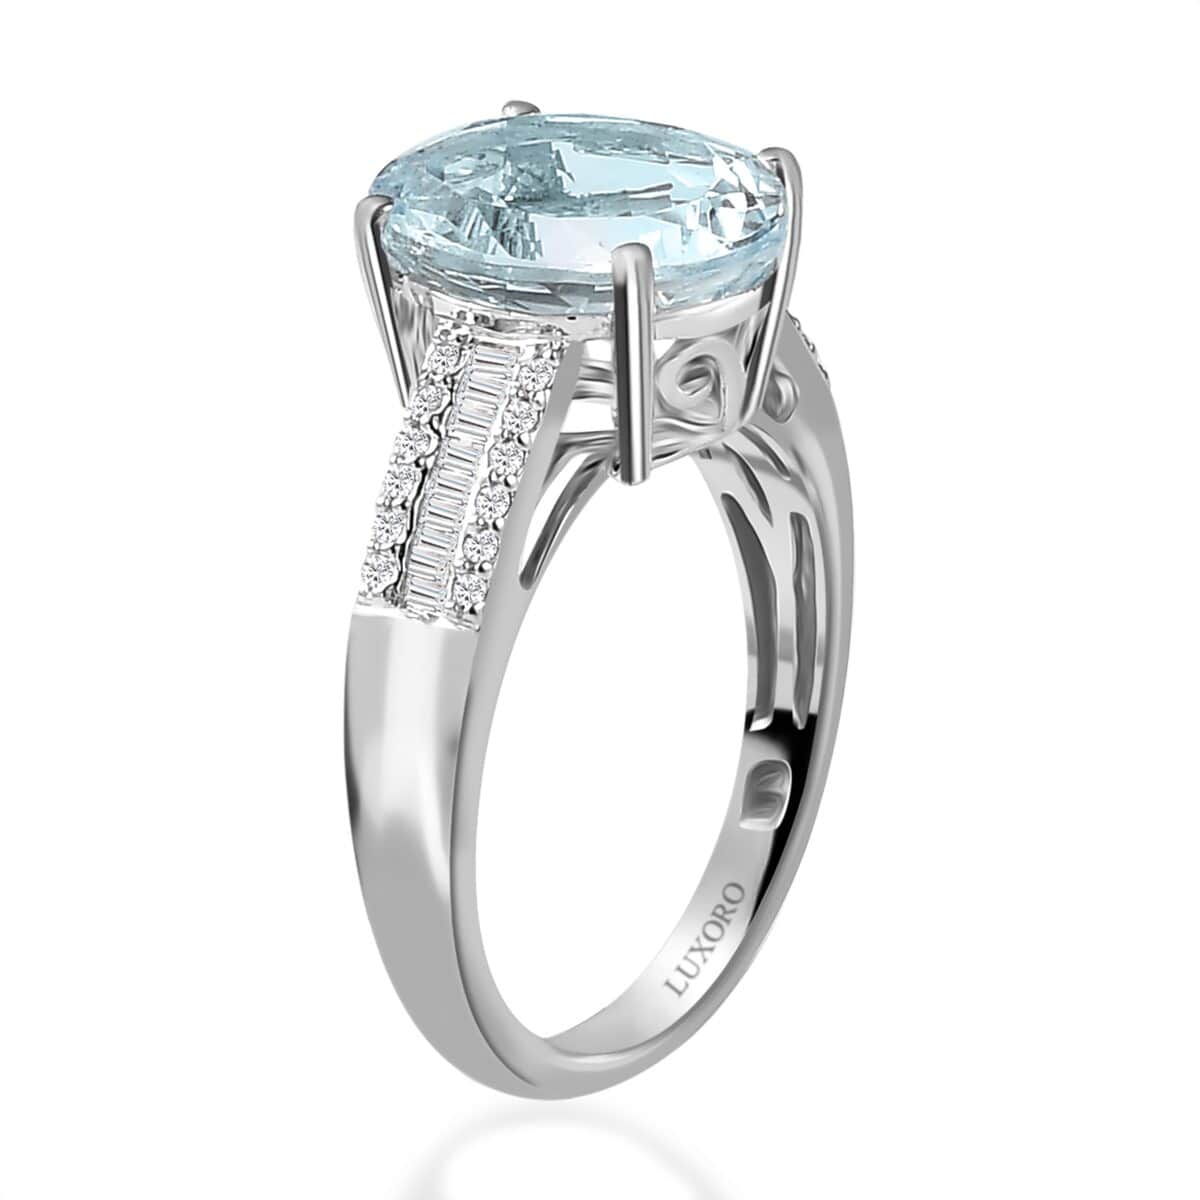 LUXORO 10K White Gold Premium Espirito Santo Aquamarine and Diamond Ring (Size 10.0) 3 Grams 3.40 ctw image number 3